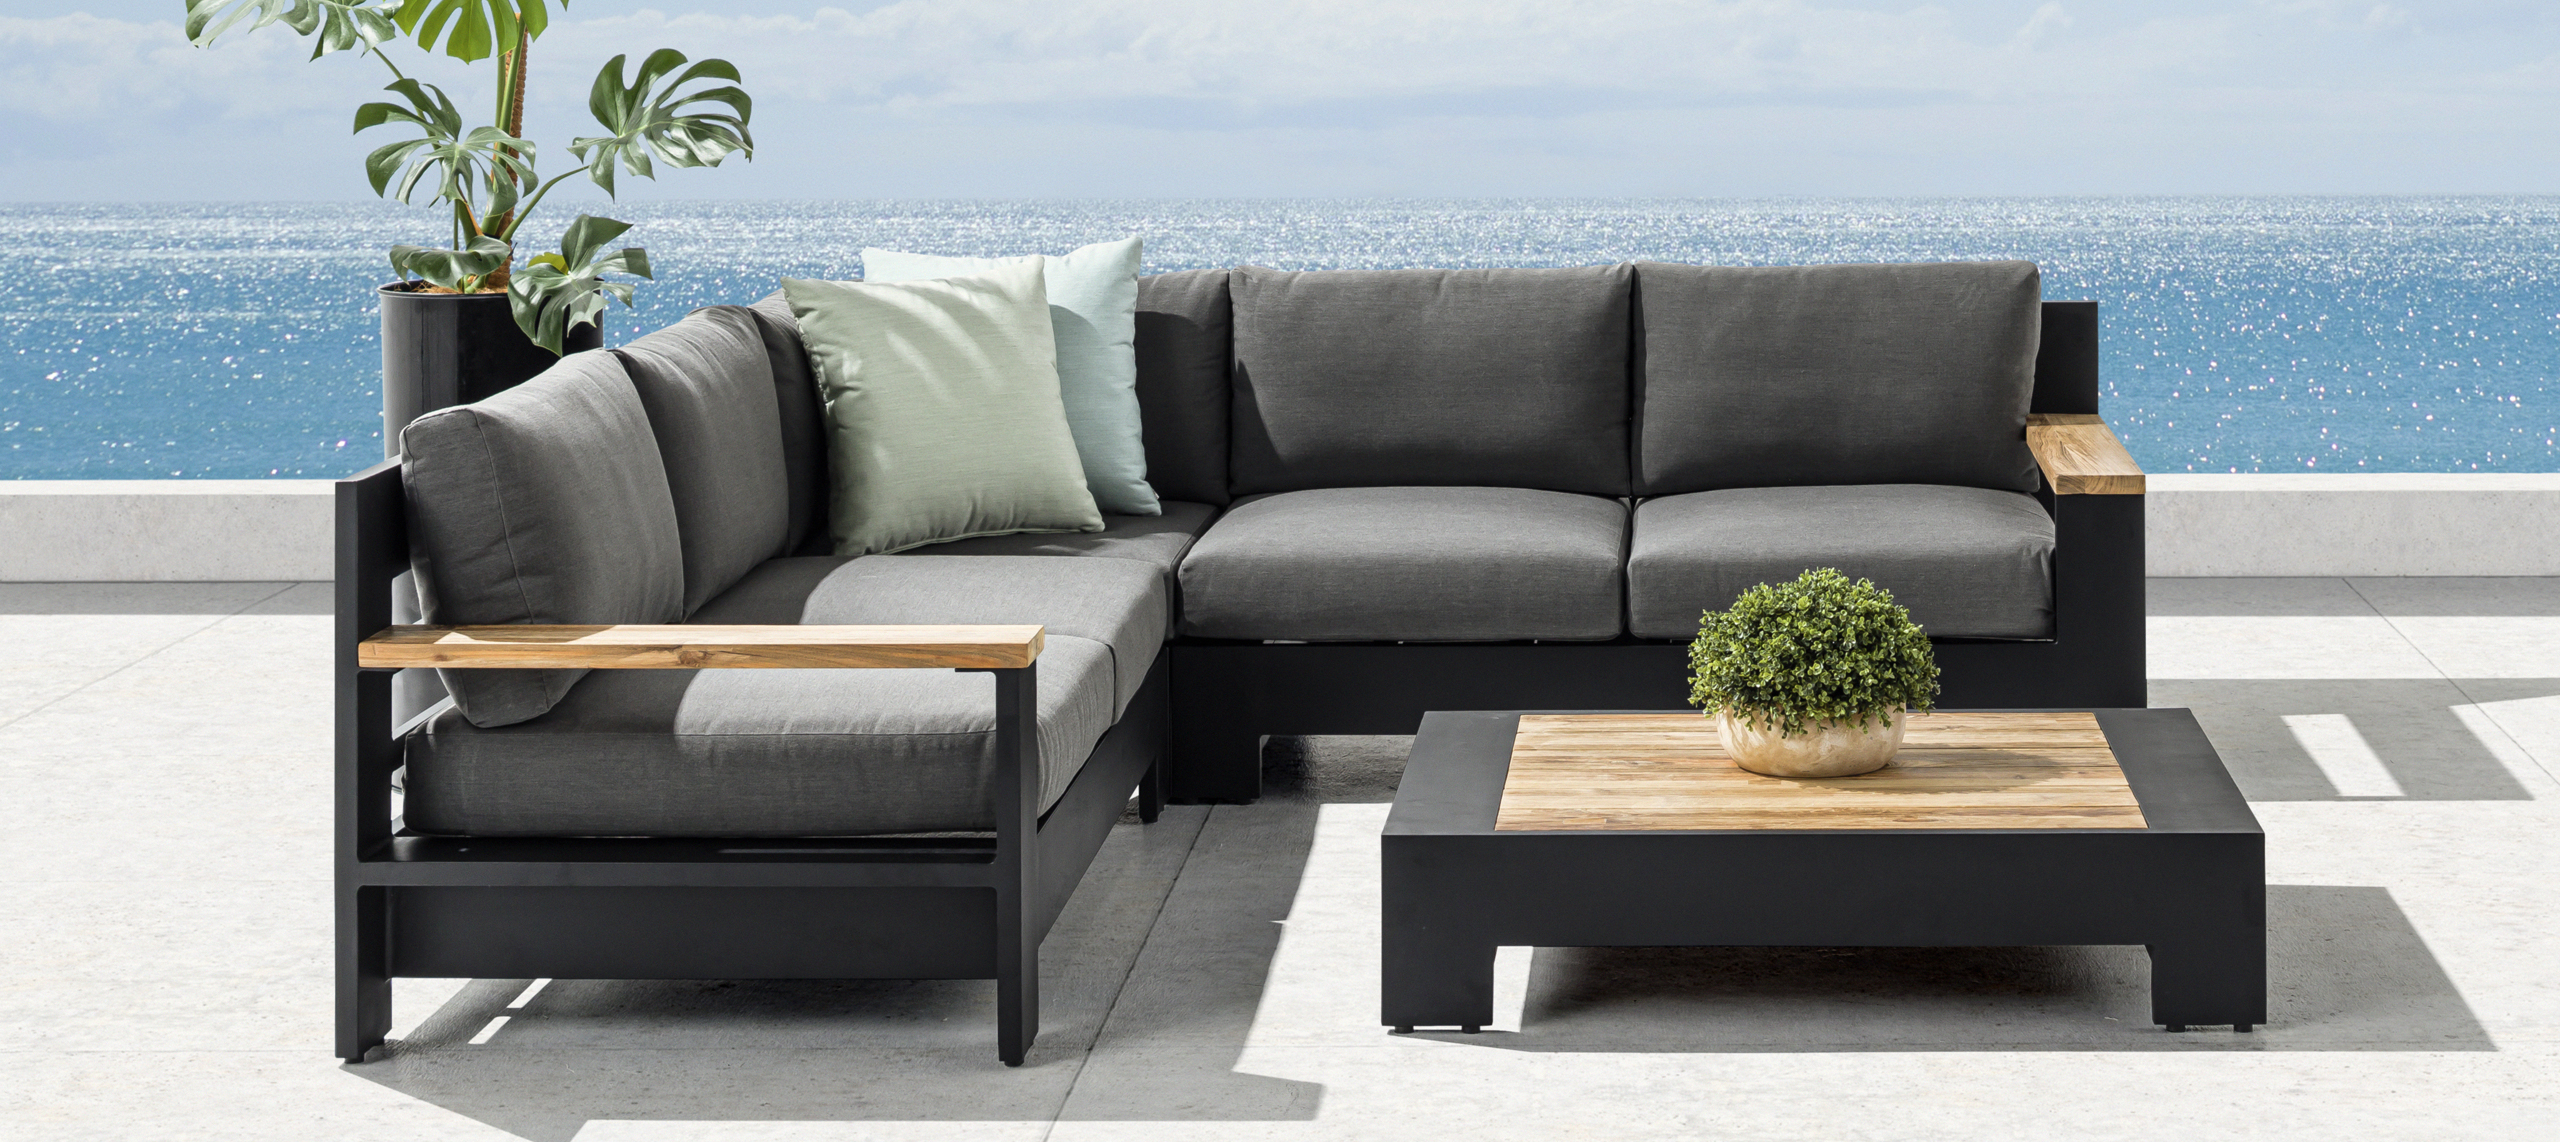 MacKenzie Aluminium Outdoor Sofa Range